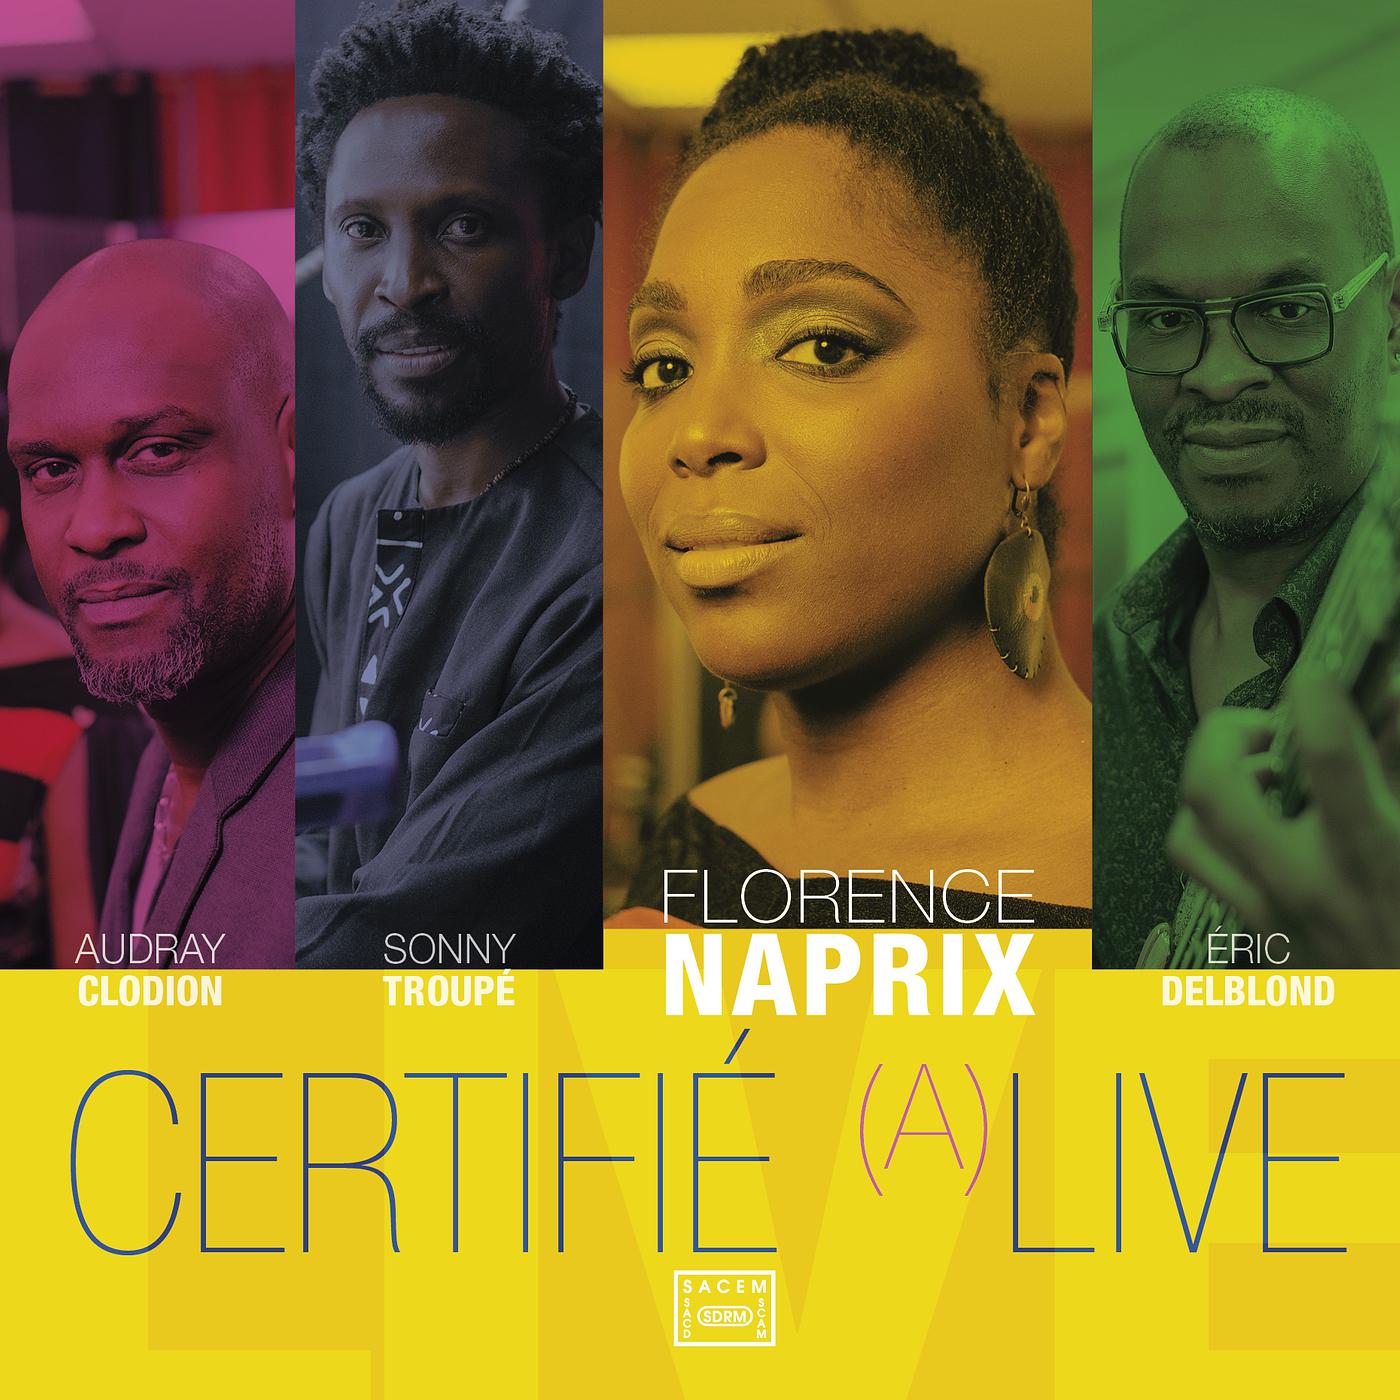 Постер альбома Certifié a live